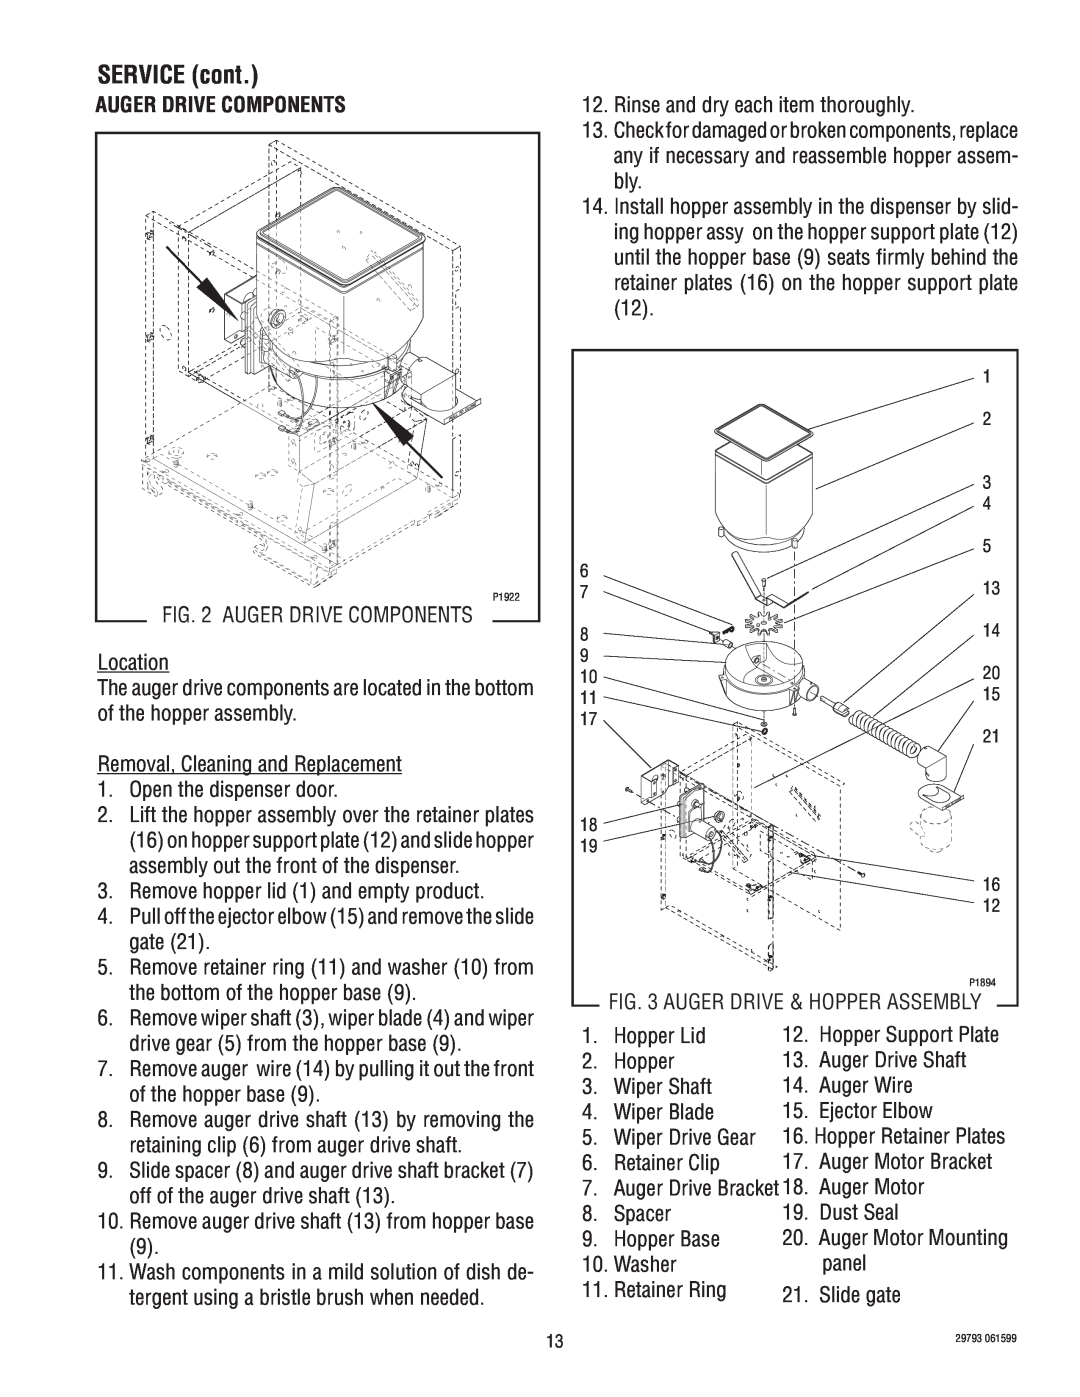 Bunn CDS-3 manual SERVICE cont, Auger Drive Components 